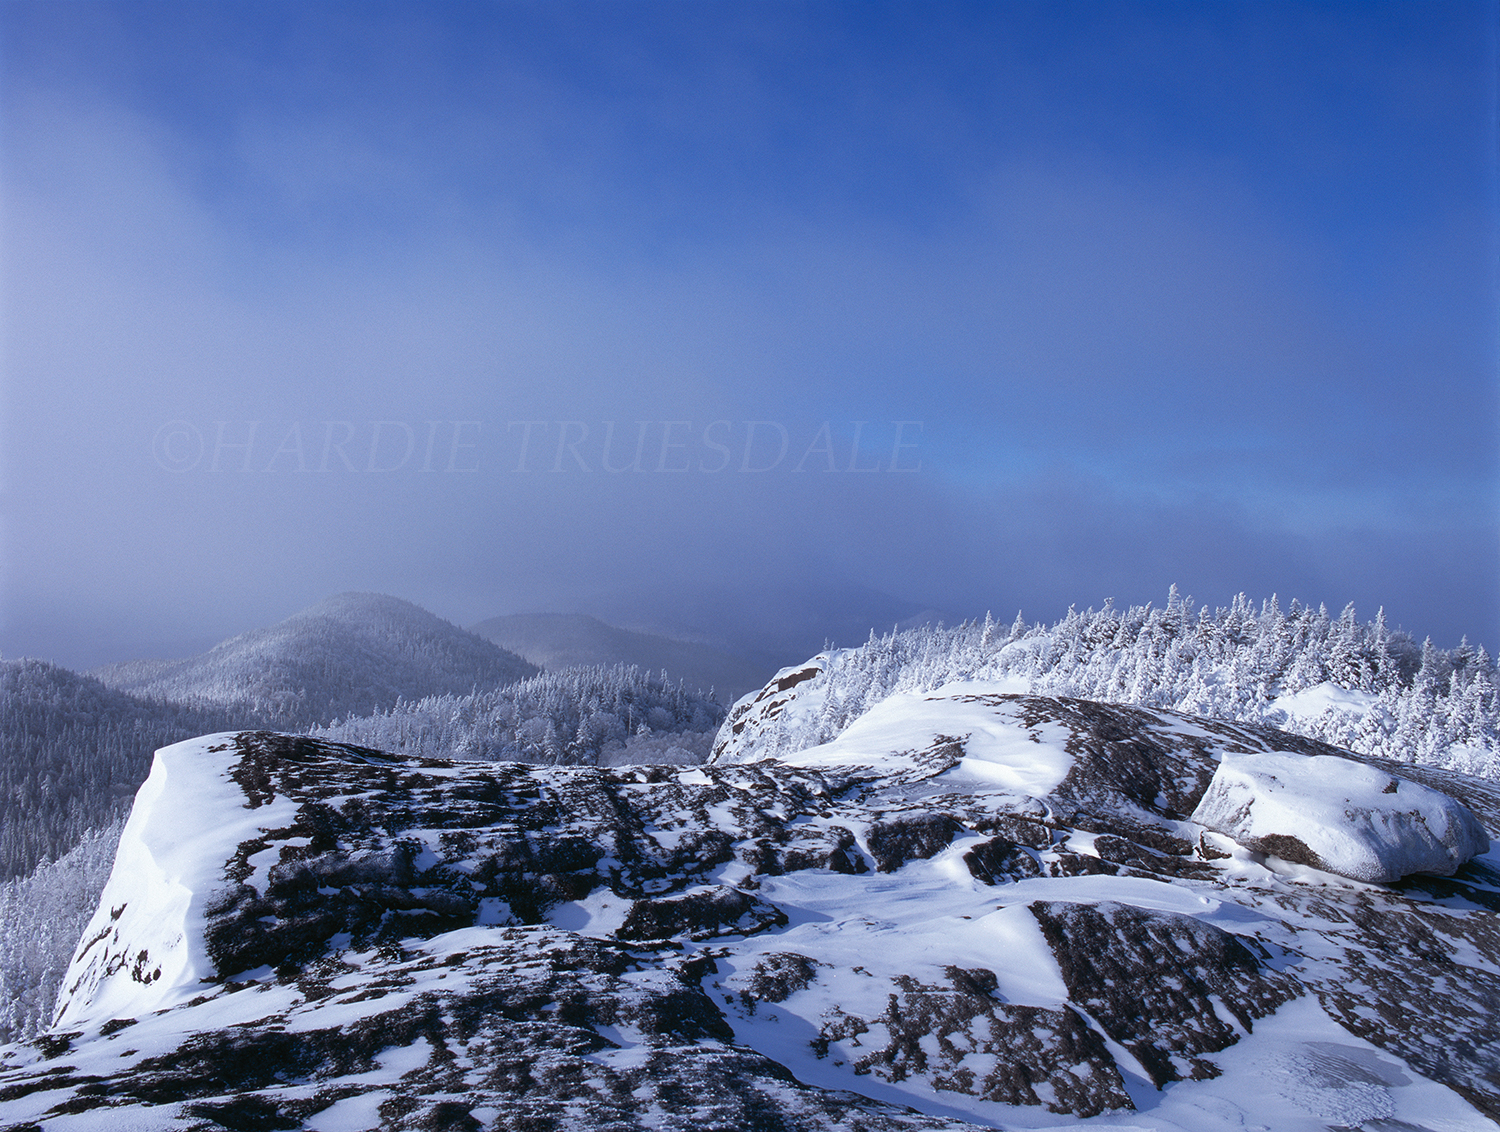  Adk#116 "Winter Storm, Ampersand Mountain, Adirondack Preserve, NY" 